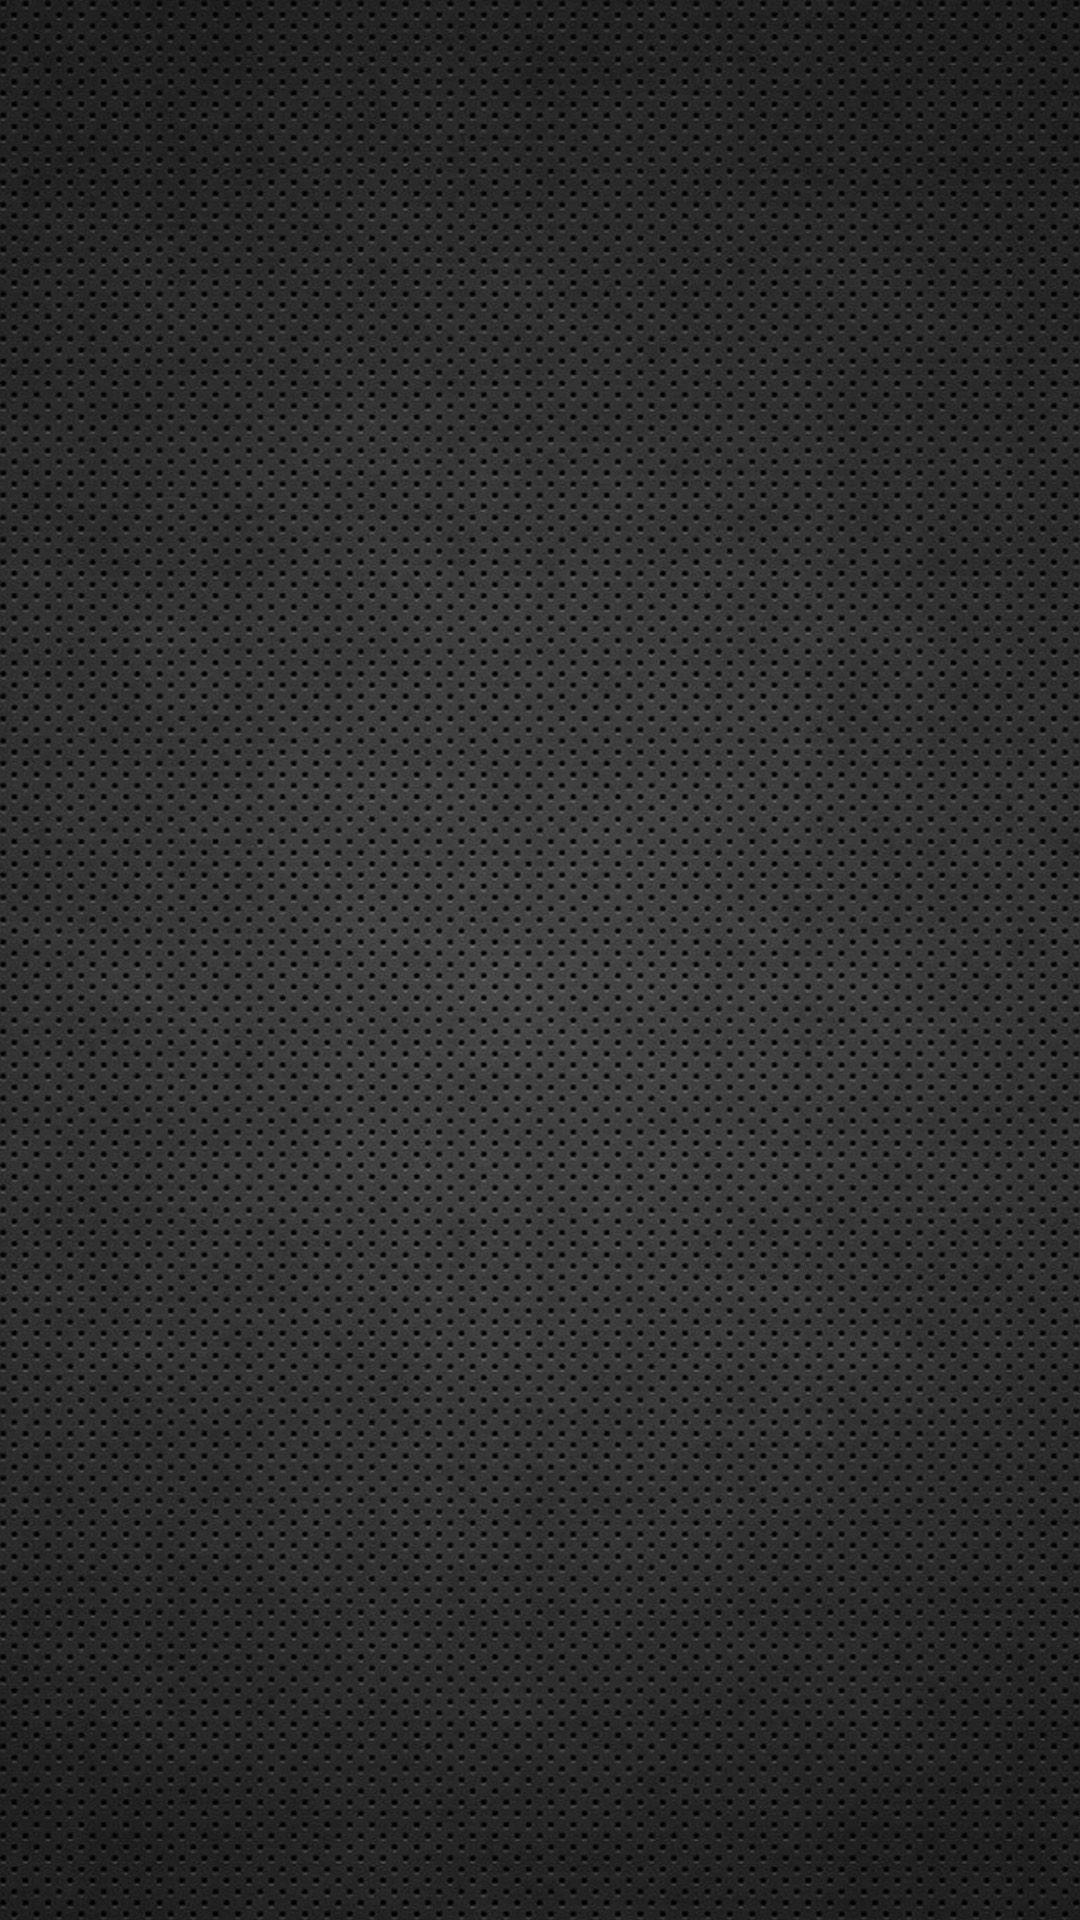 Carbon Fiber iPhone Background Free Download